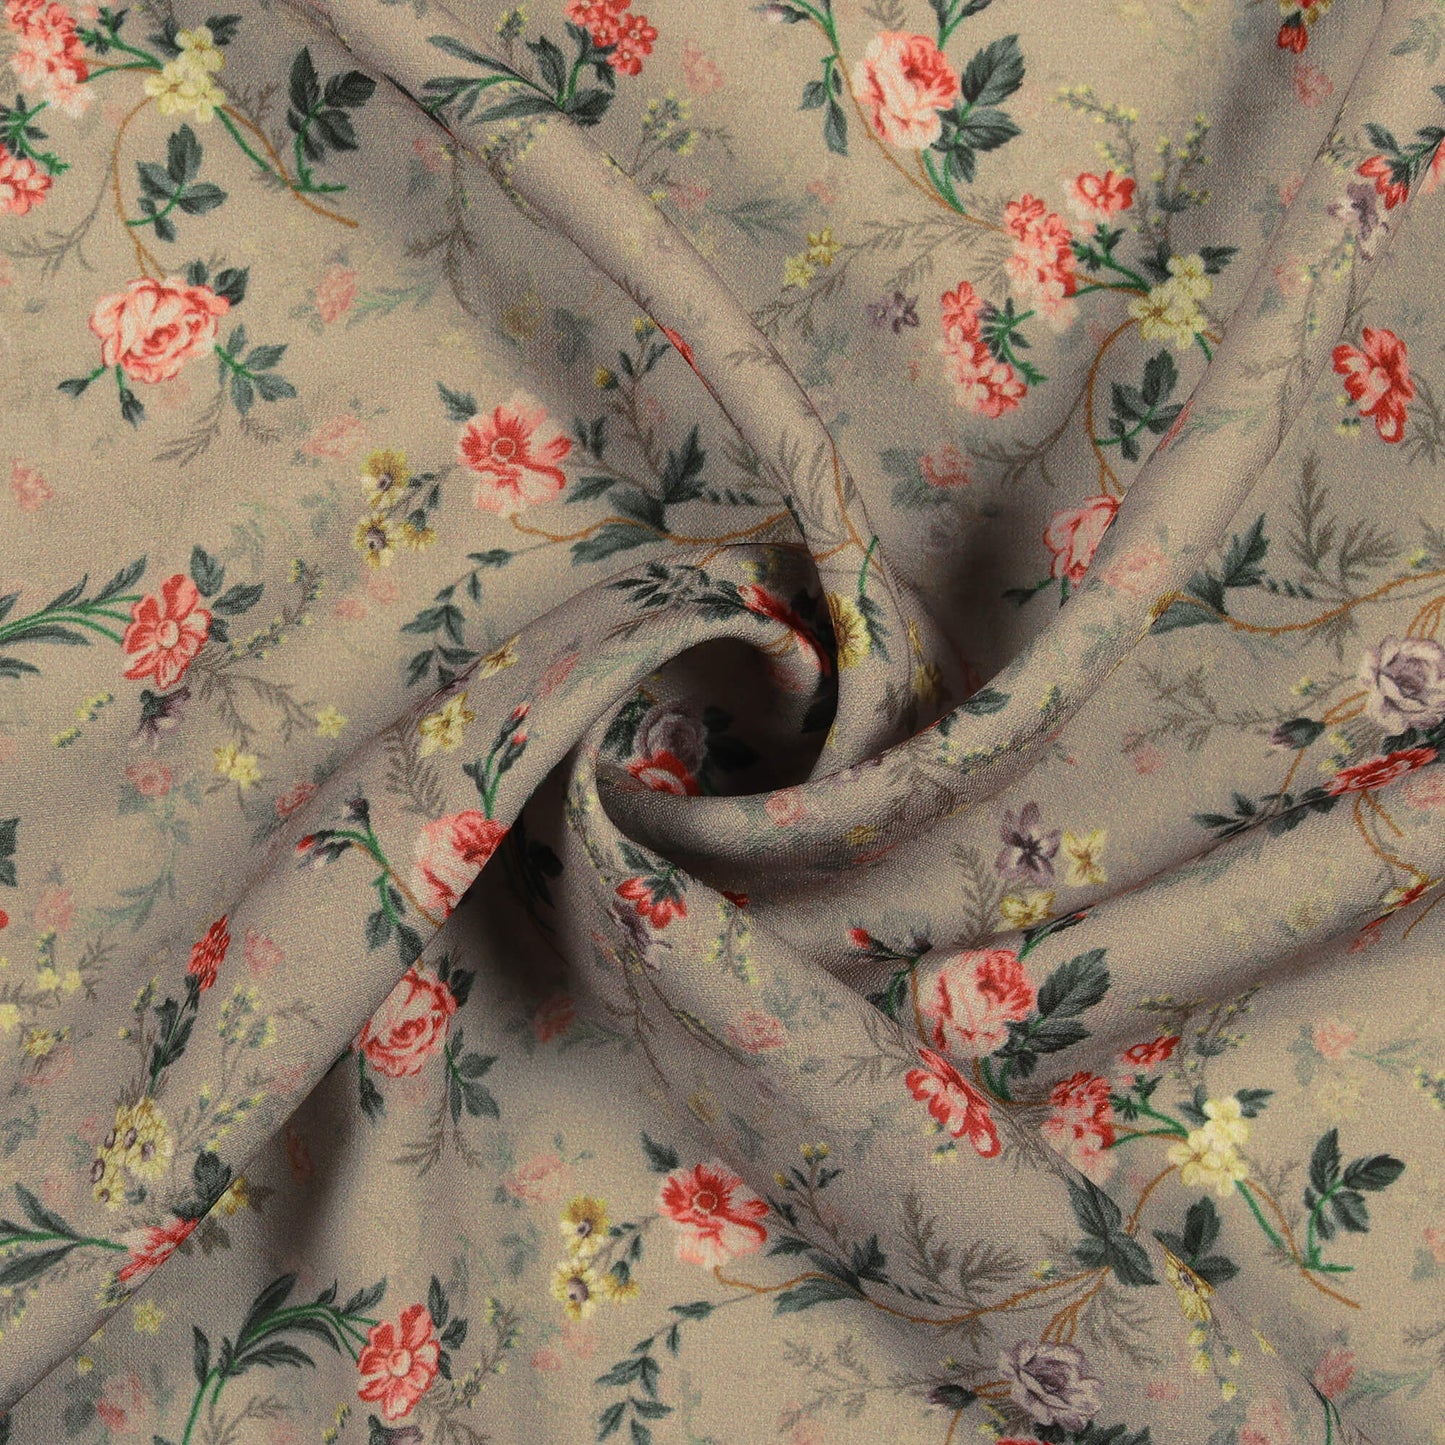 Artichoke Green And Pink Floral Pattern Digital Print BSY Crepe Fabric